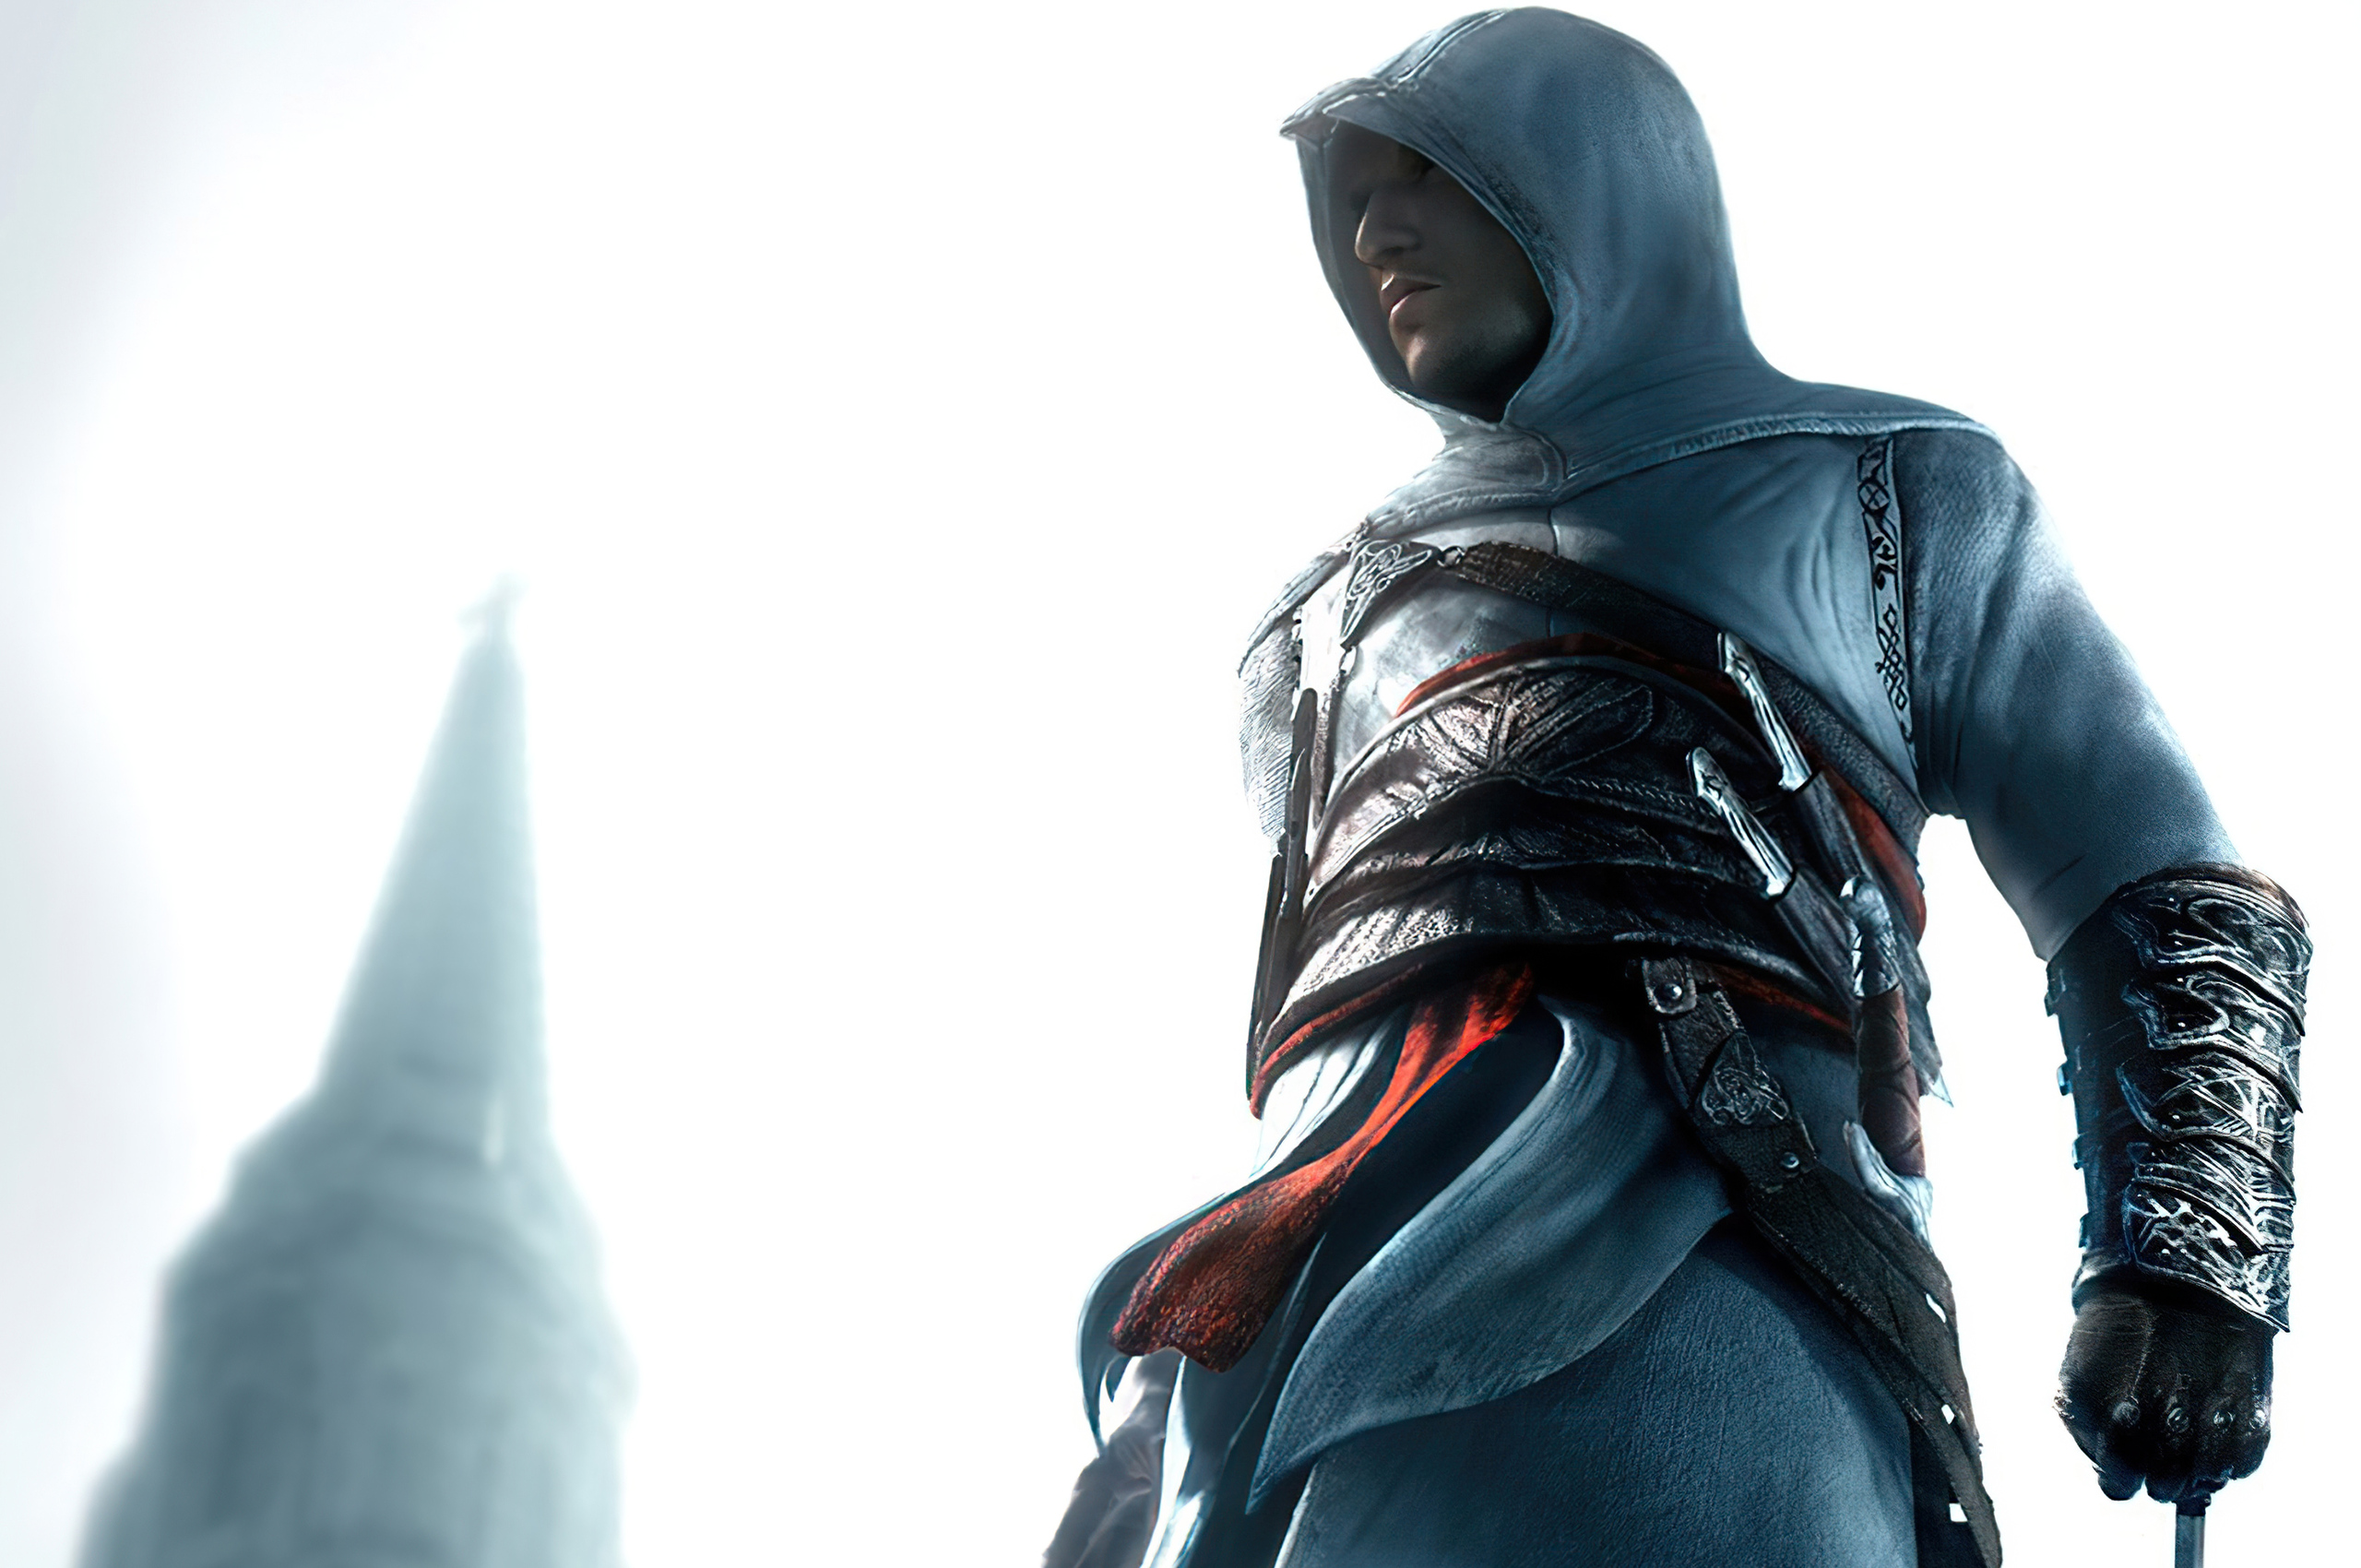 Ассасин крид виды. Самый первый ассасин. Assassin’s Creed (игра) 2007. Ассасин ориджинал. Assassin's Creed first.